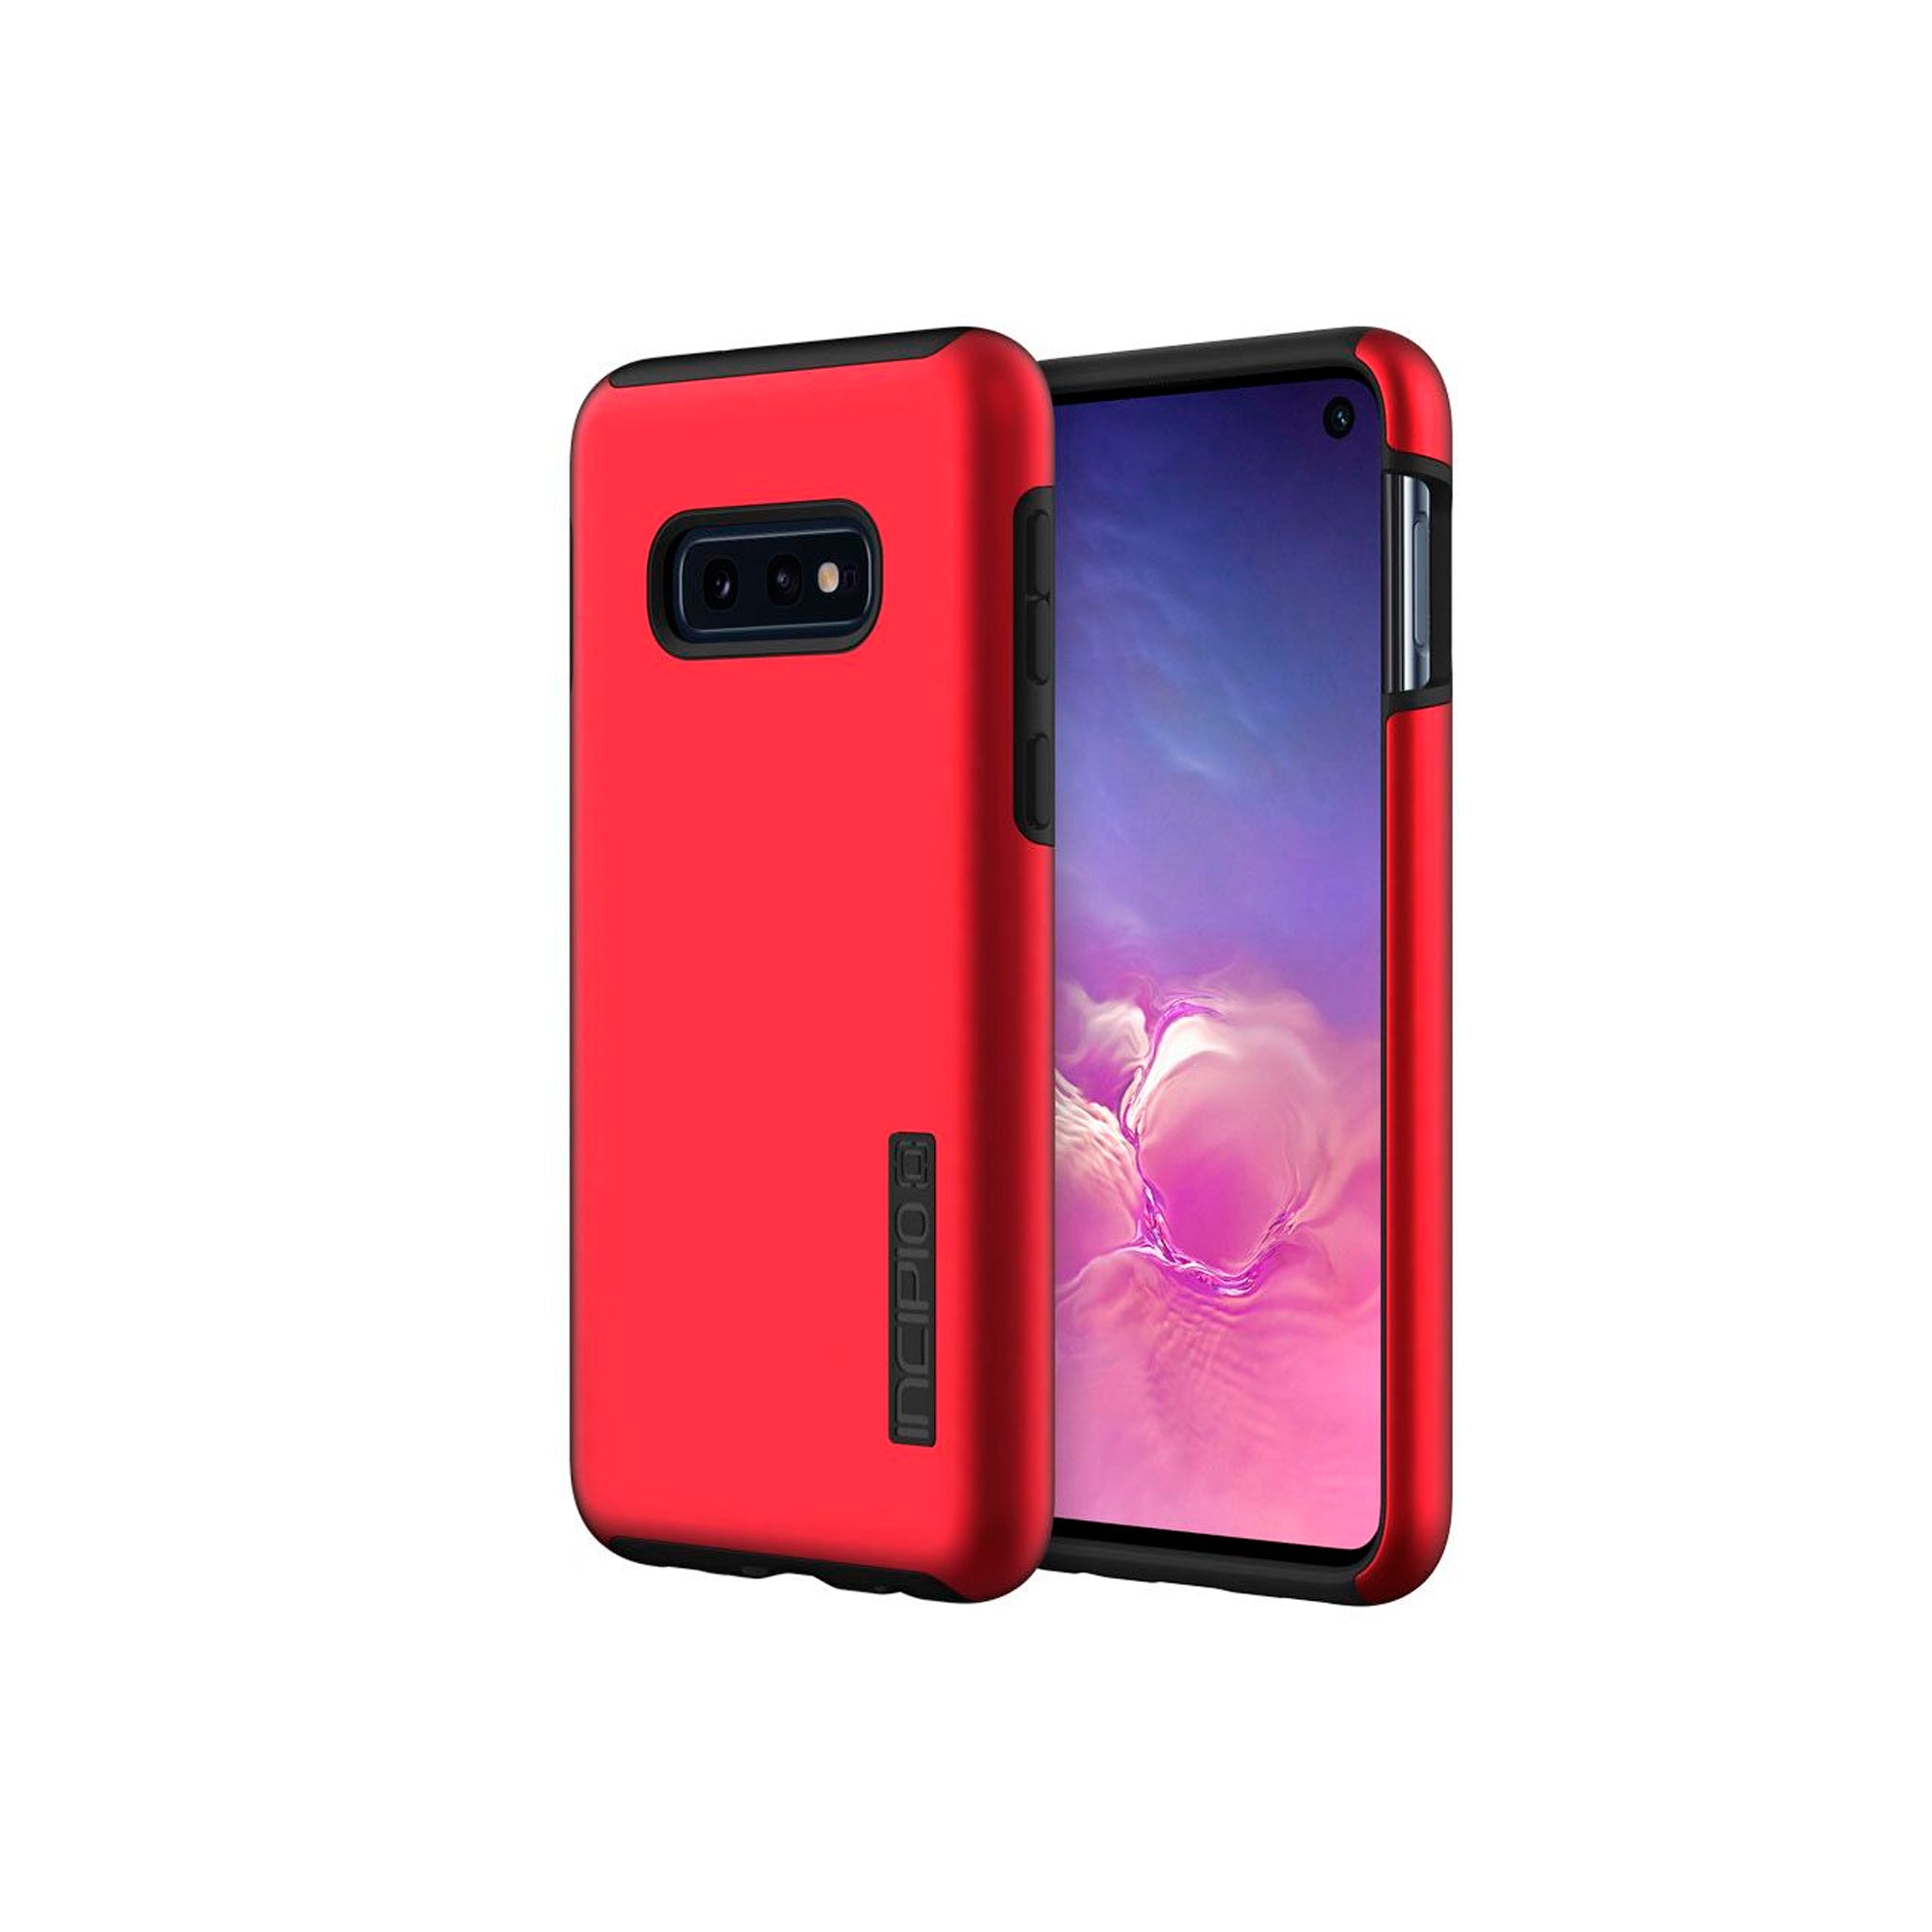 Incipio - DualPro Case For Samsung Galaxy S10e - Iridescent Red And Black